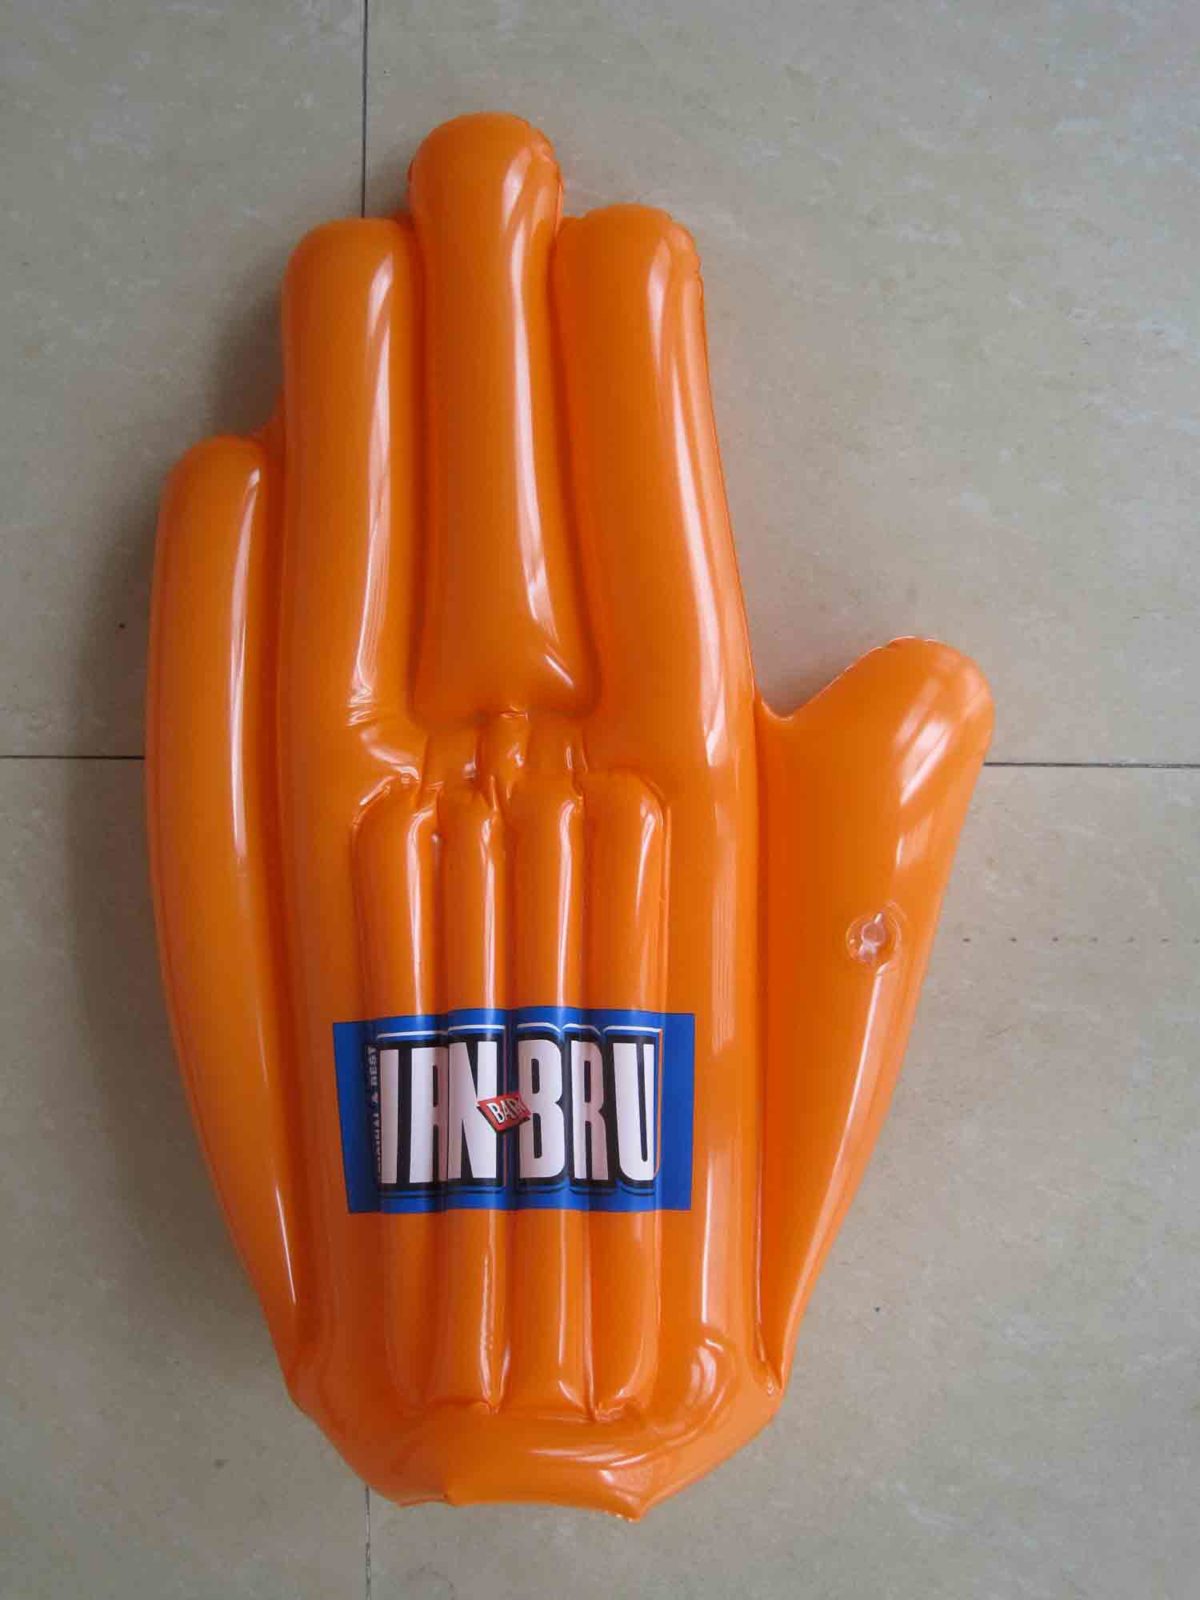 Giant orange inflatable hand